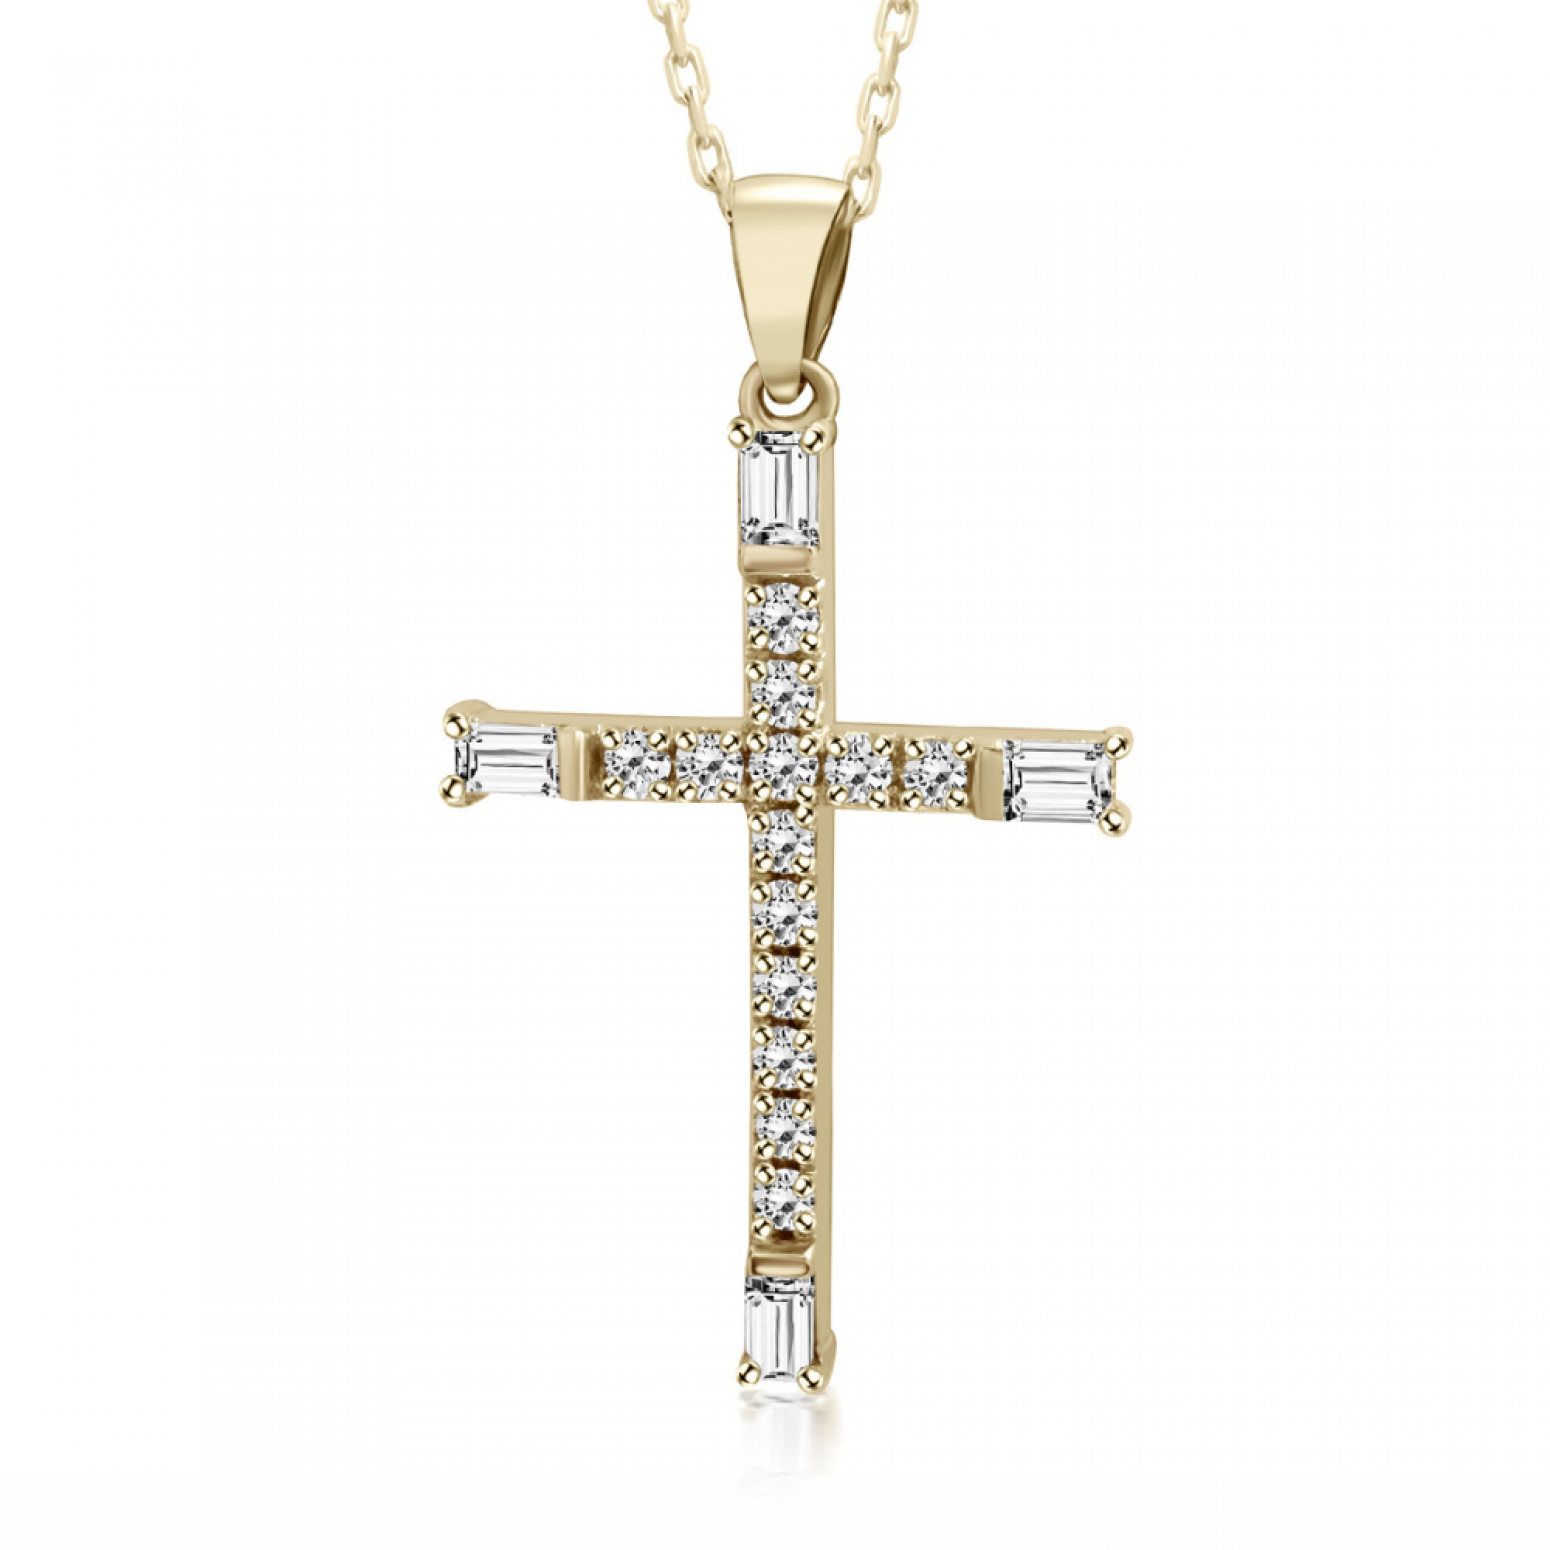 Baptism cross with chain K18 gold with diamonds 0.29ct, VS1, G ko6076 CROSSES Κοσμηματα - chrilia.gr